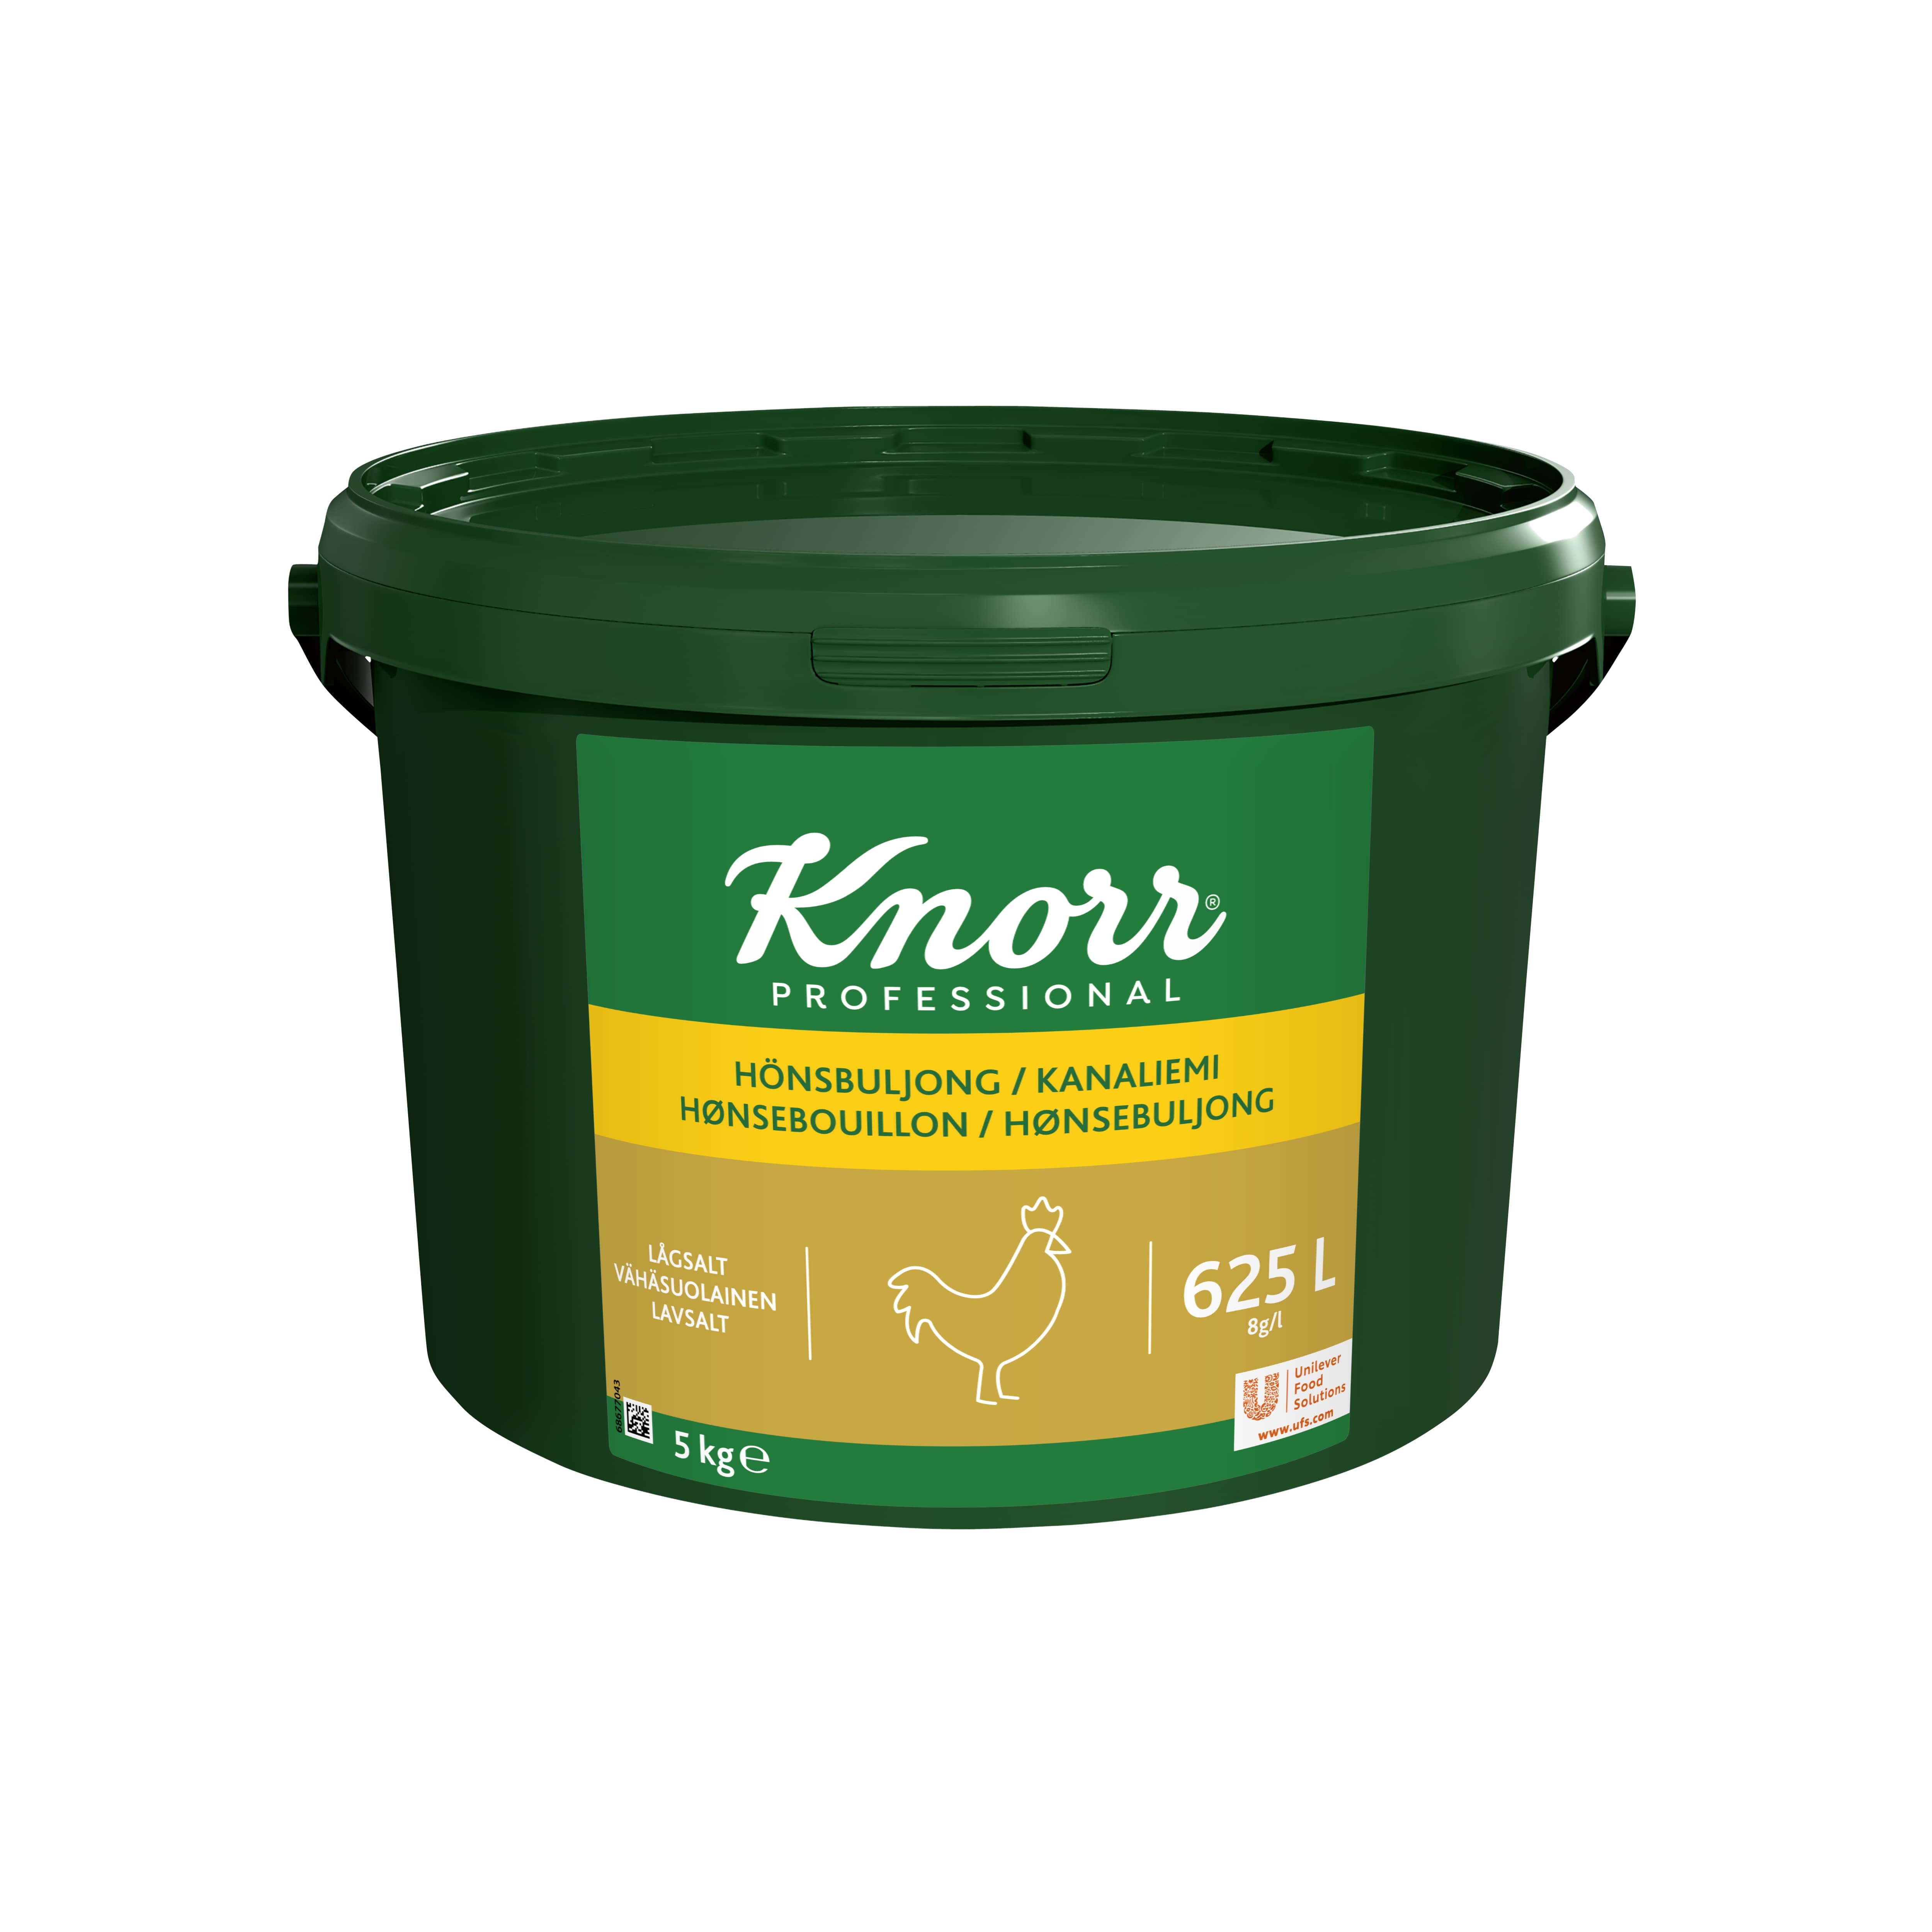 Knorr Kanaliemi vähäsuolainen 5 kg/ 625 L - 